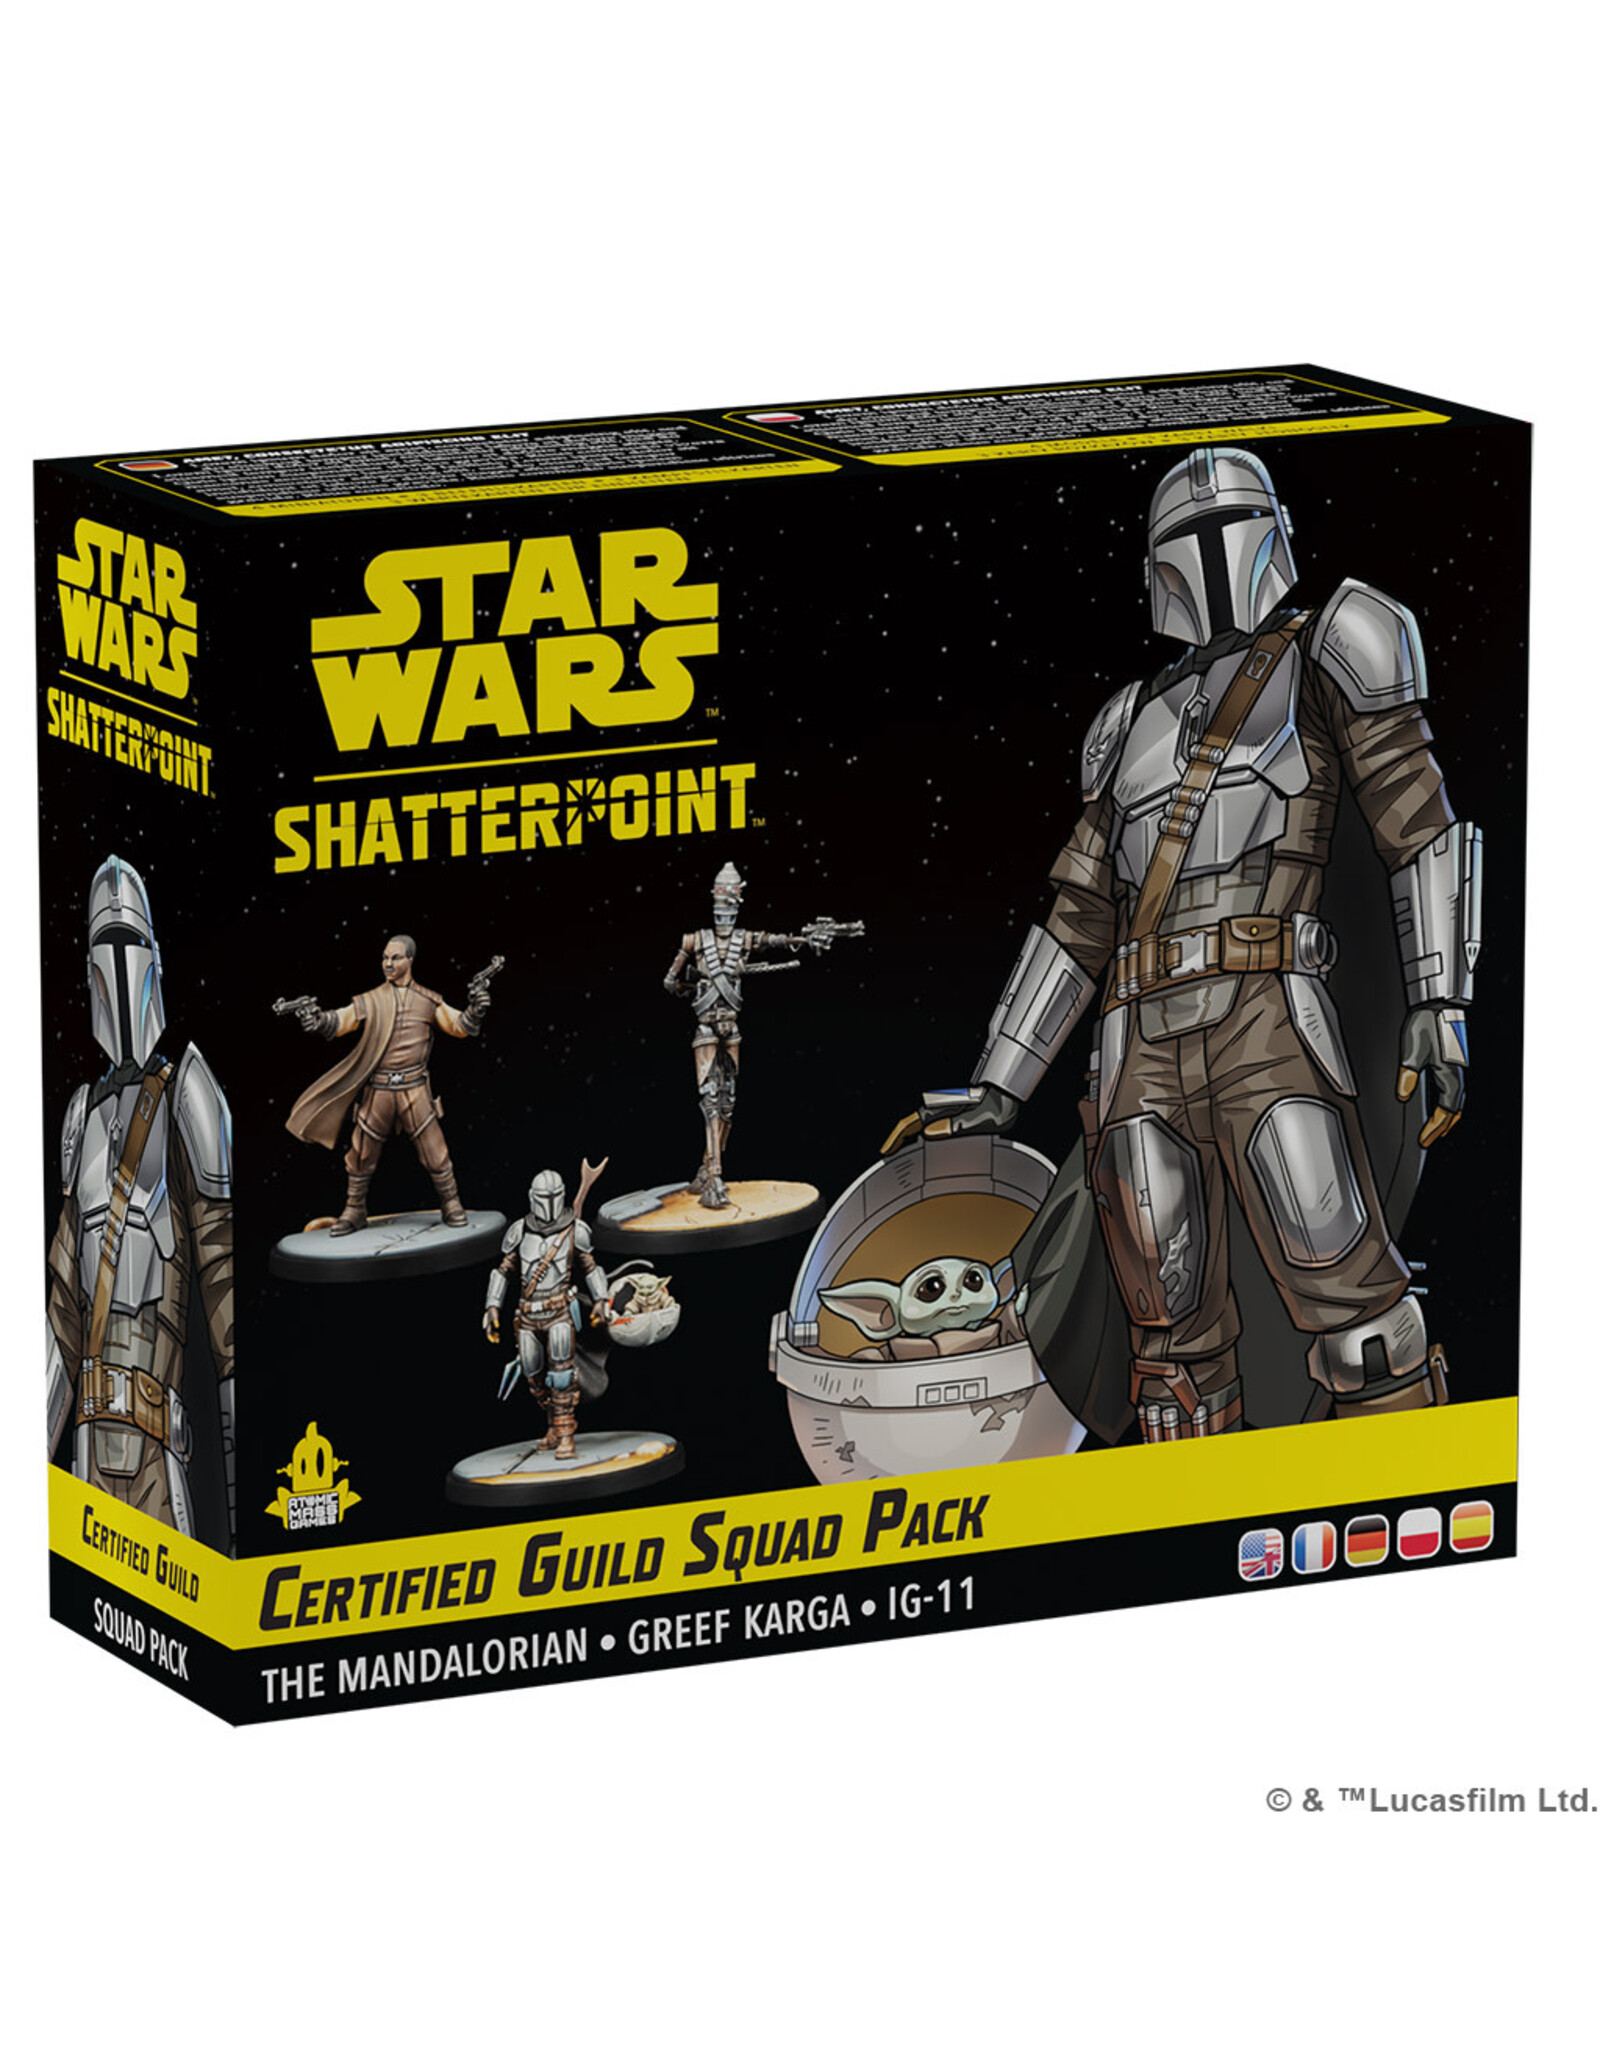 Star Wars Shatterpoint Star Wars Shatterpoint  Certified Guild Squad Pack